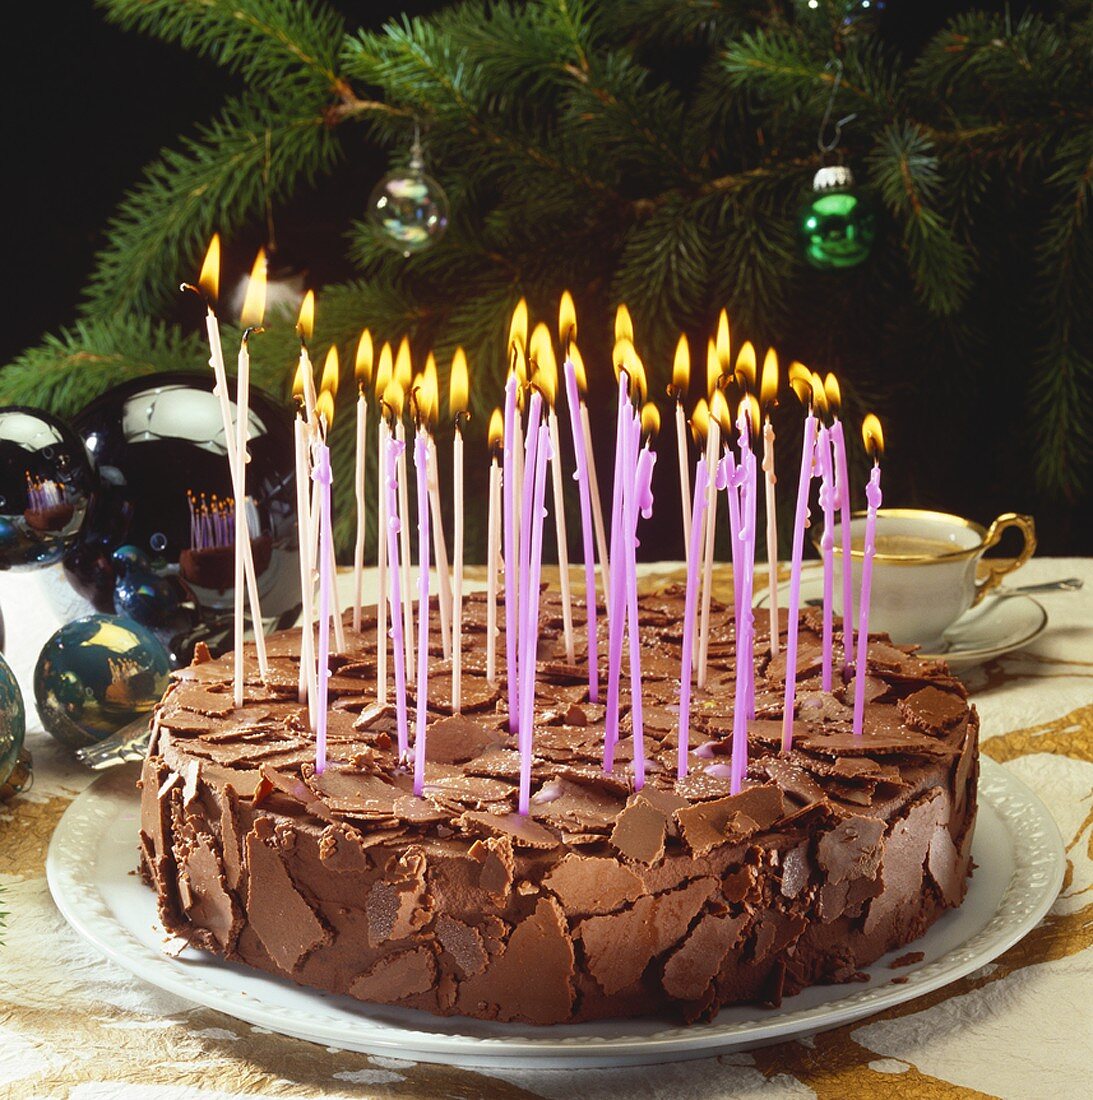 Chocolate cake with many burning candles